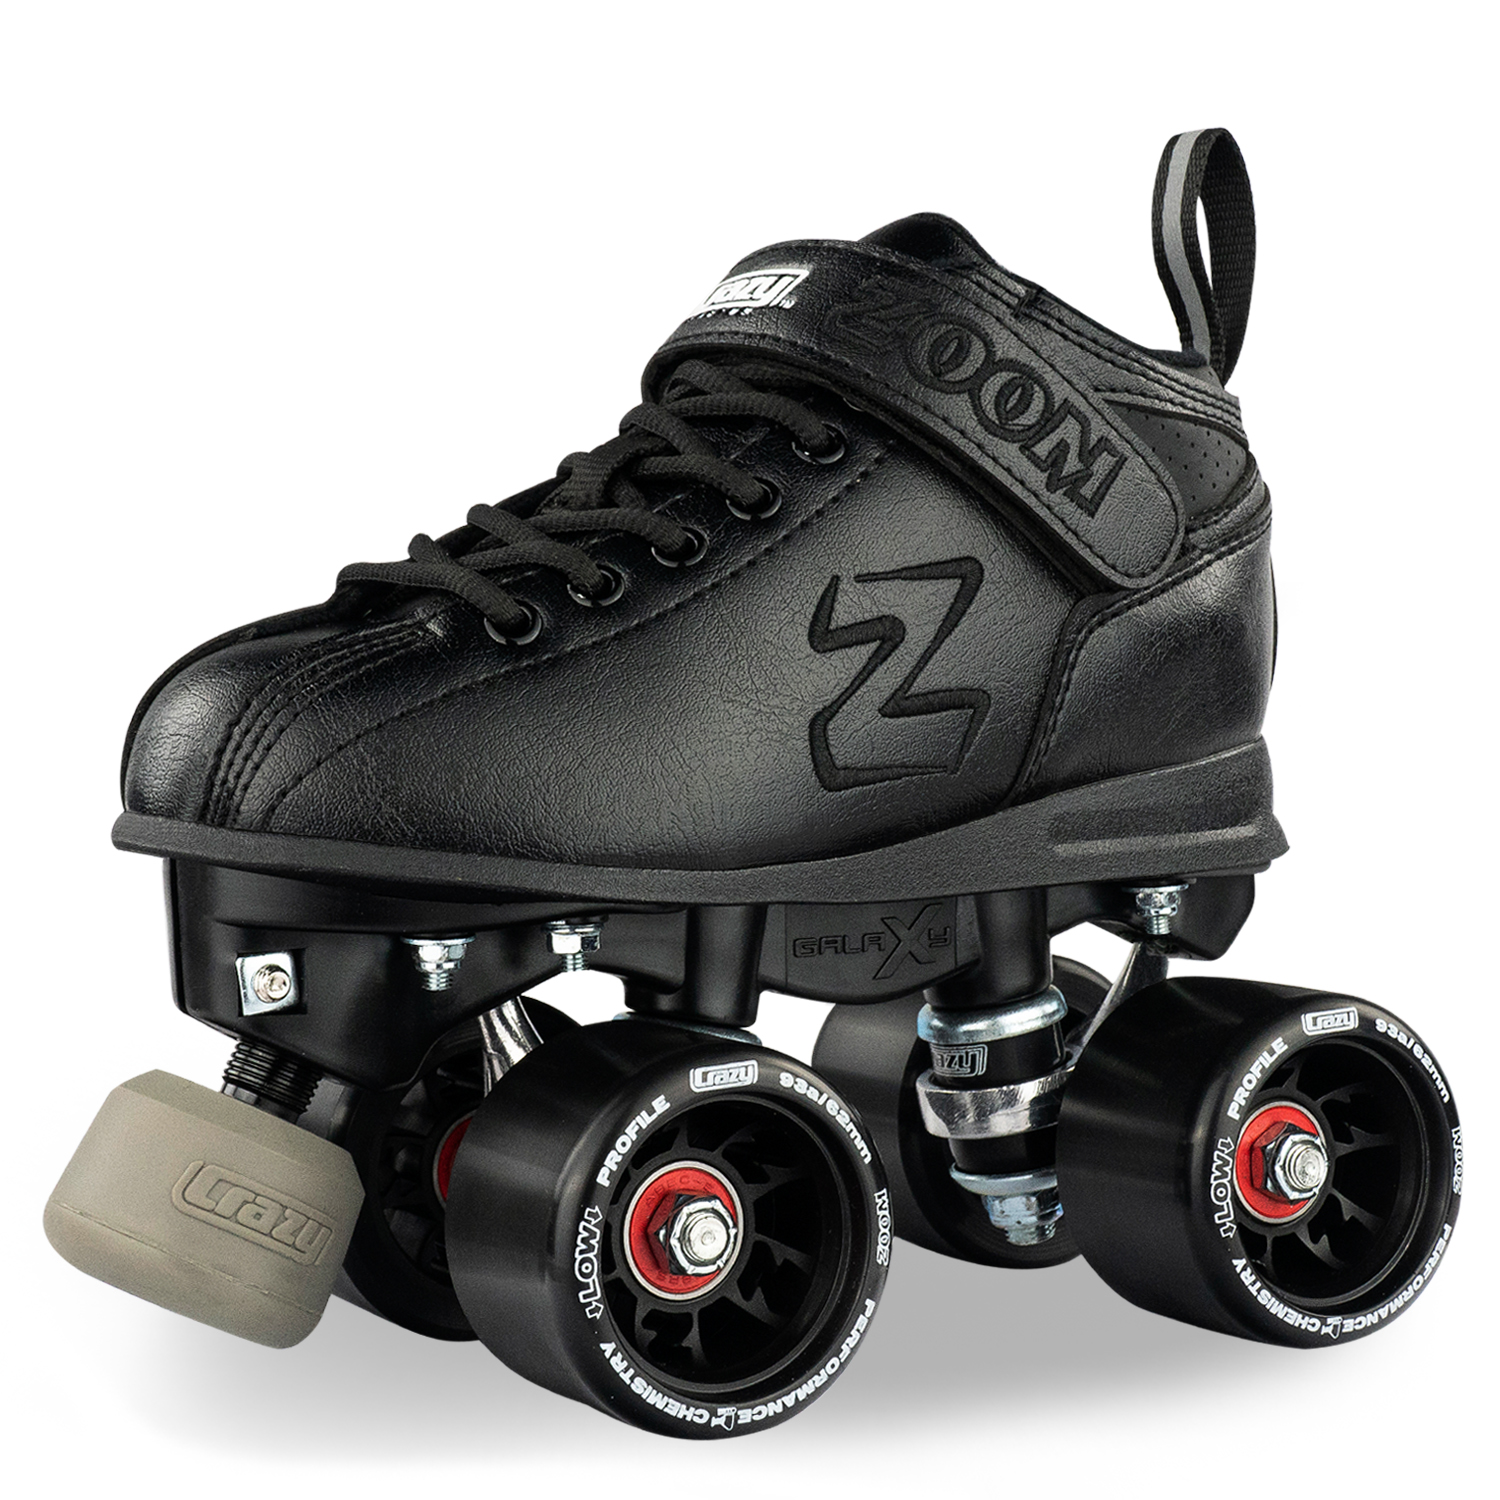 Zoom Roller Skates - High Performance Speed Skates